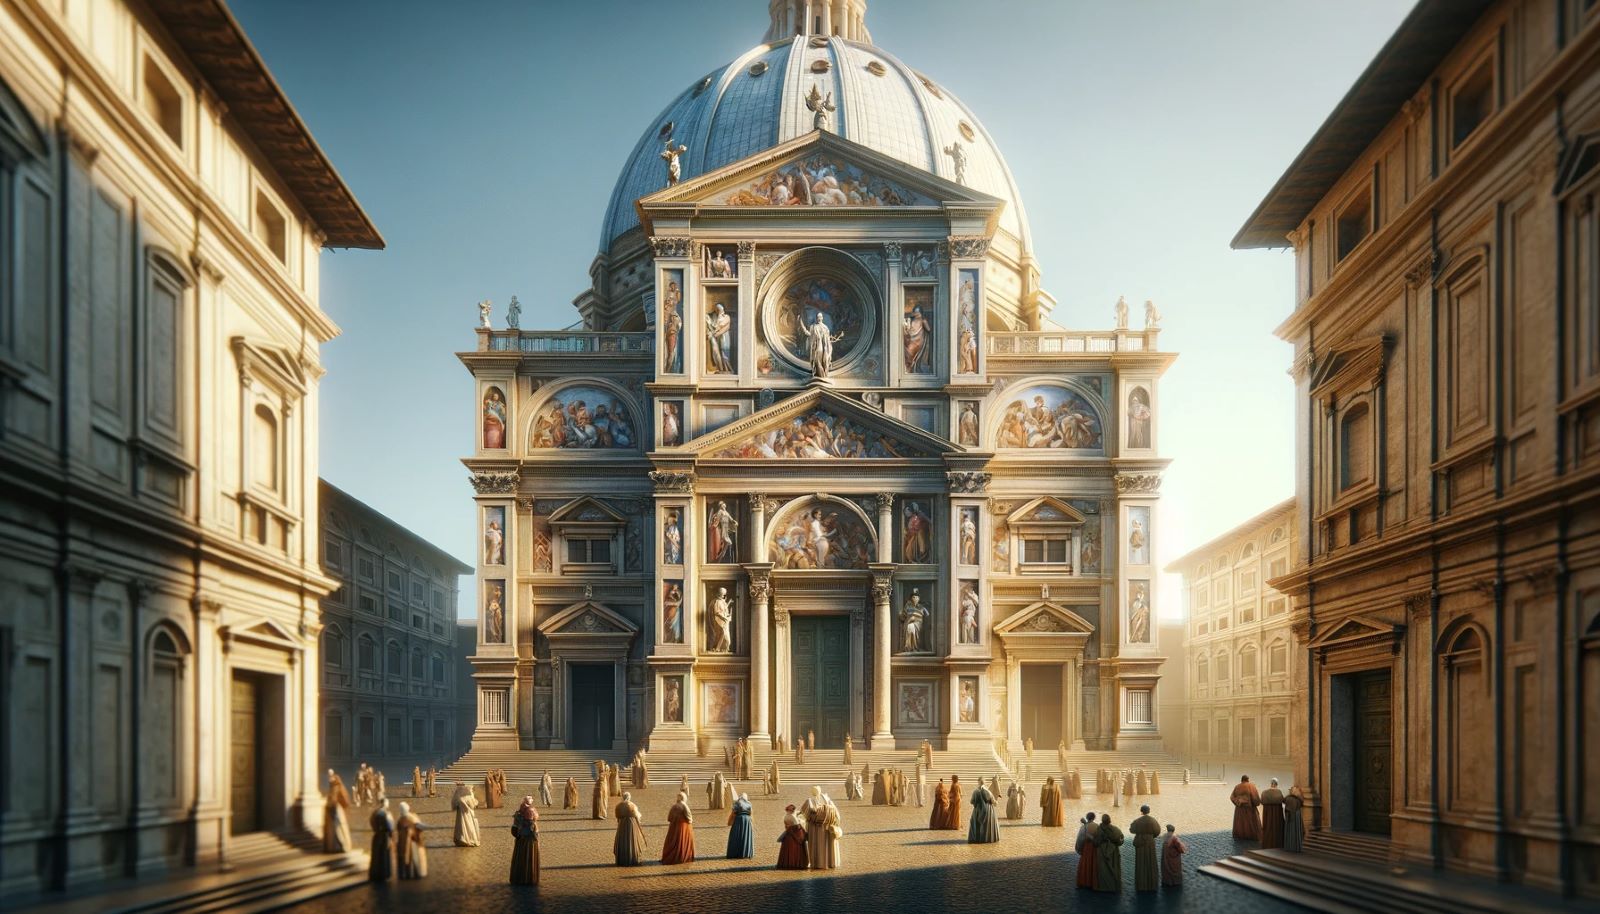 What Empire Built The Sistine Chapel